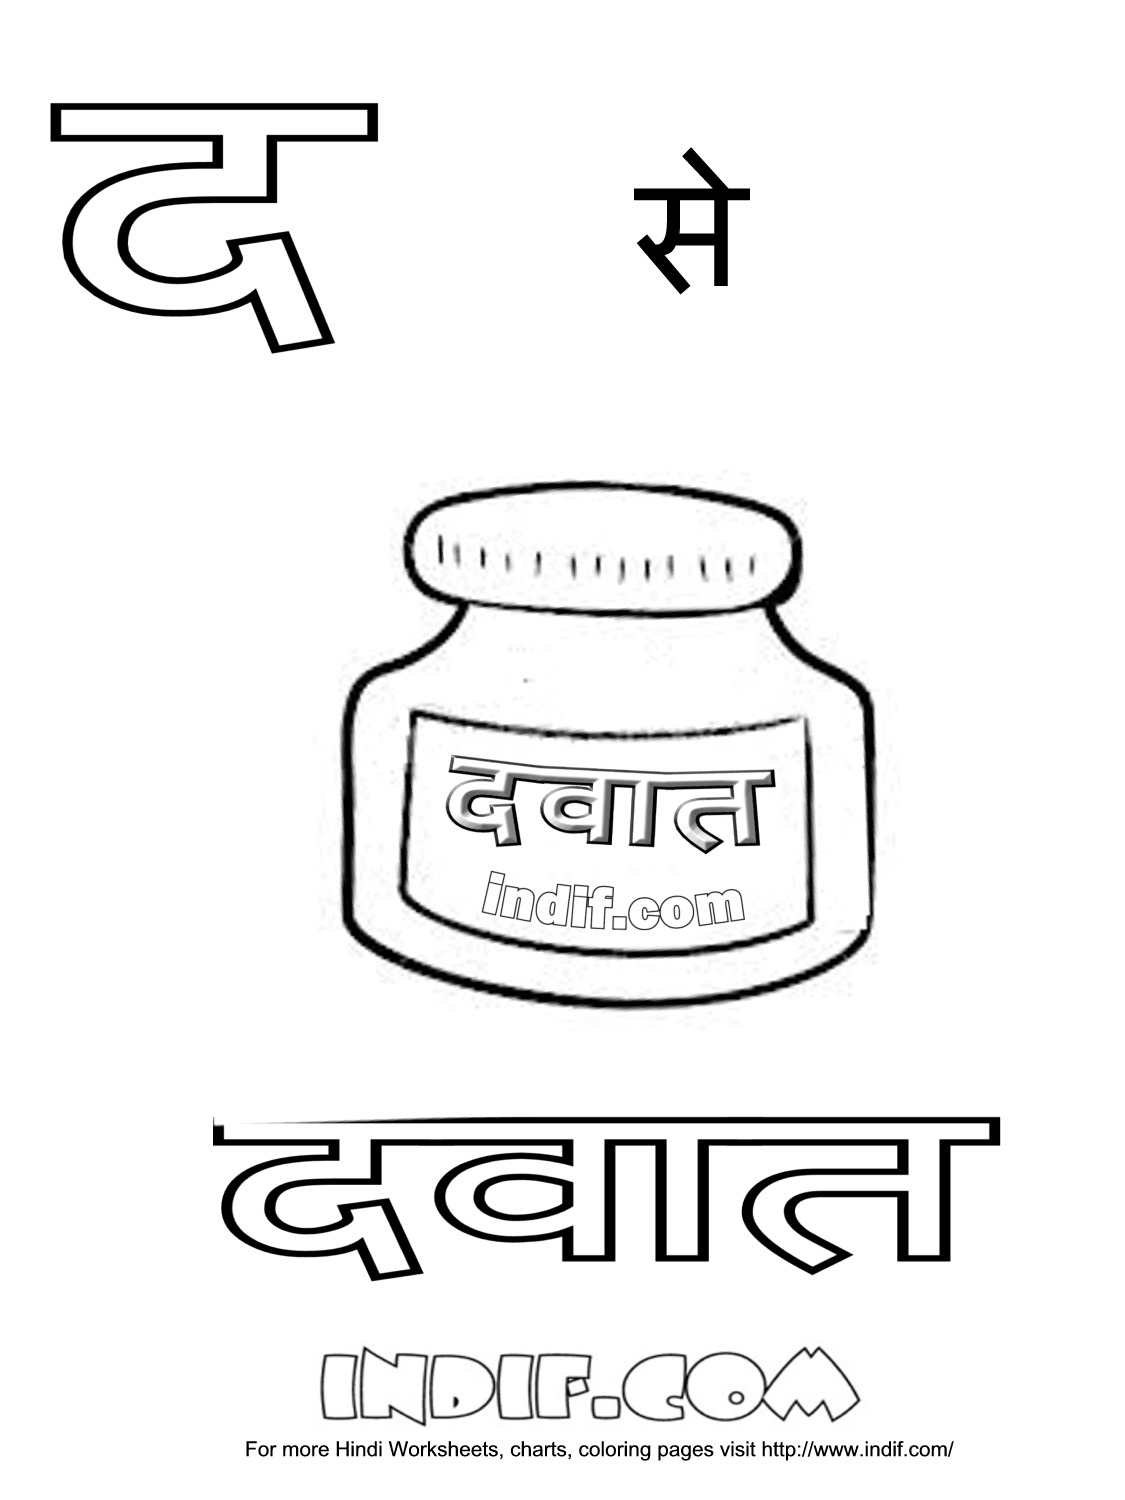 Hindi Alphabets Coloring Sheets and Pages